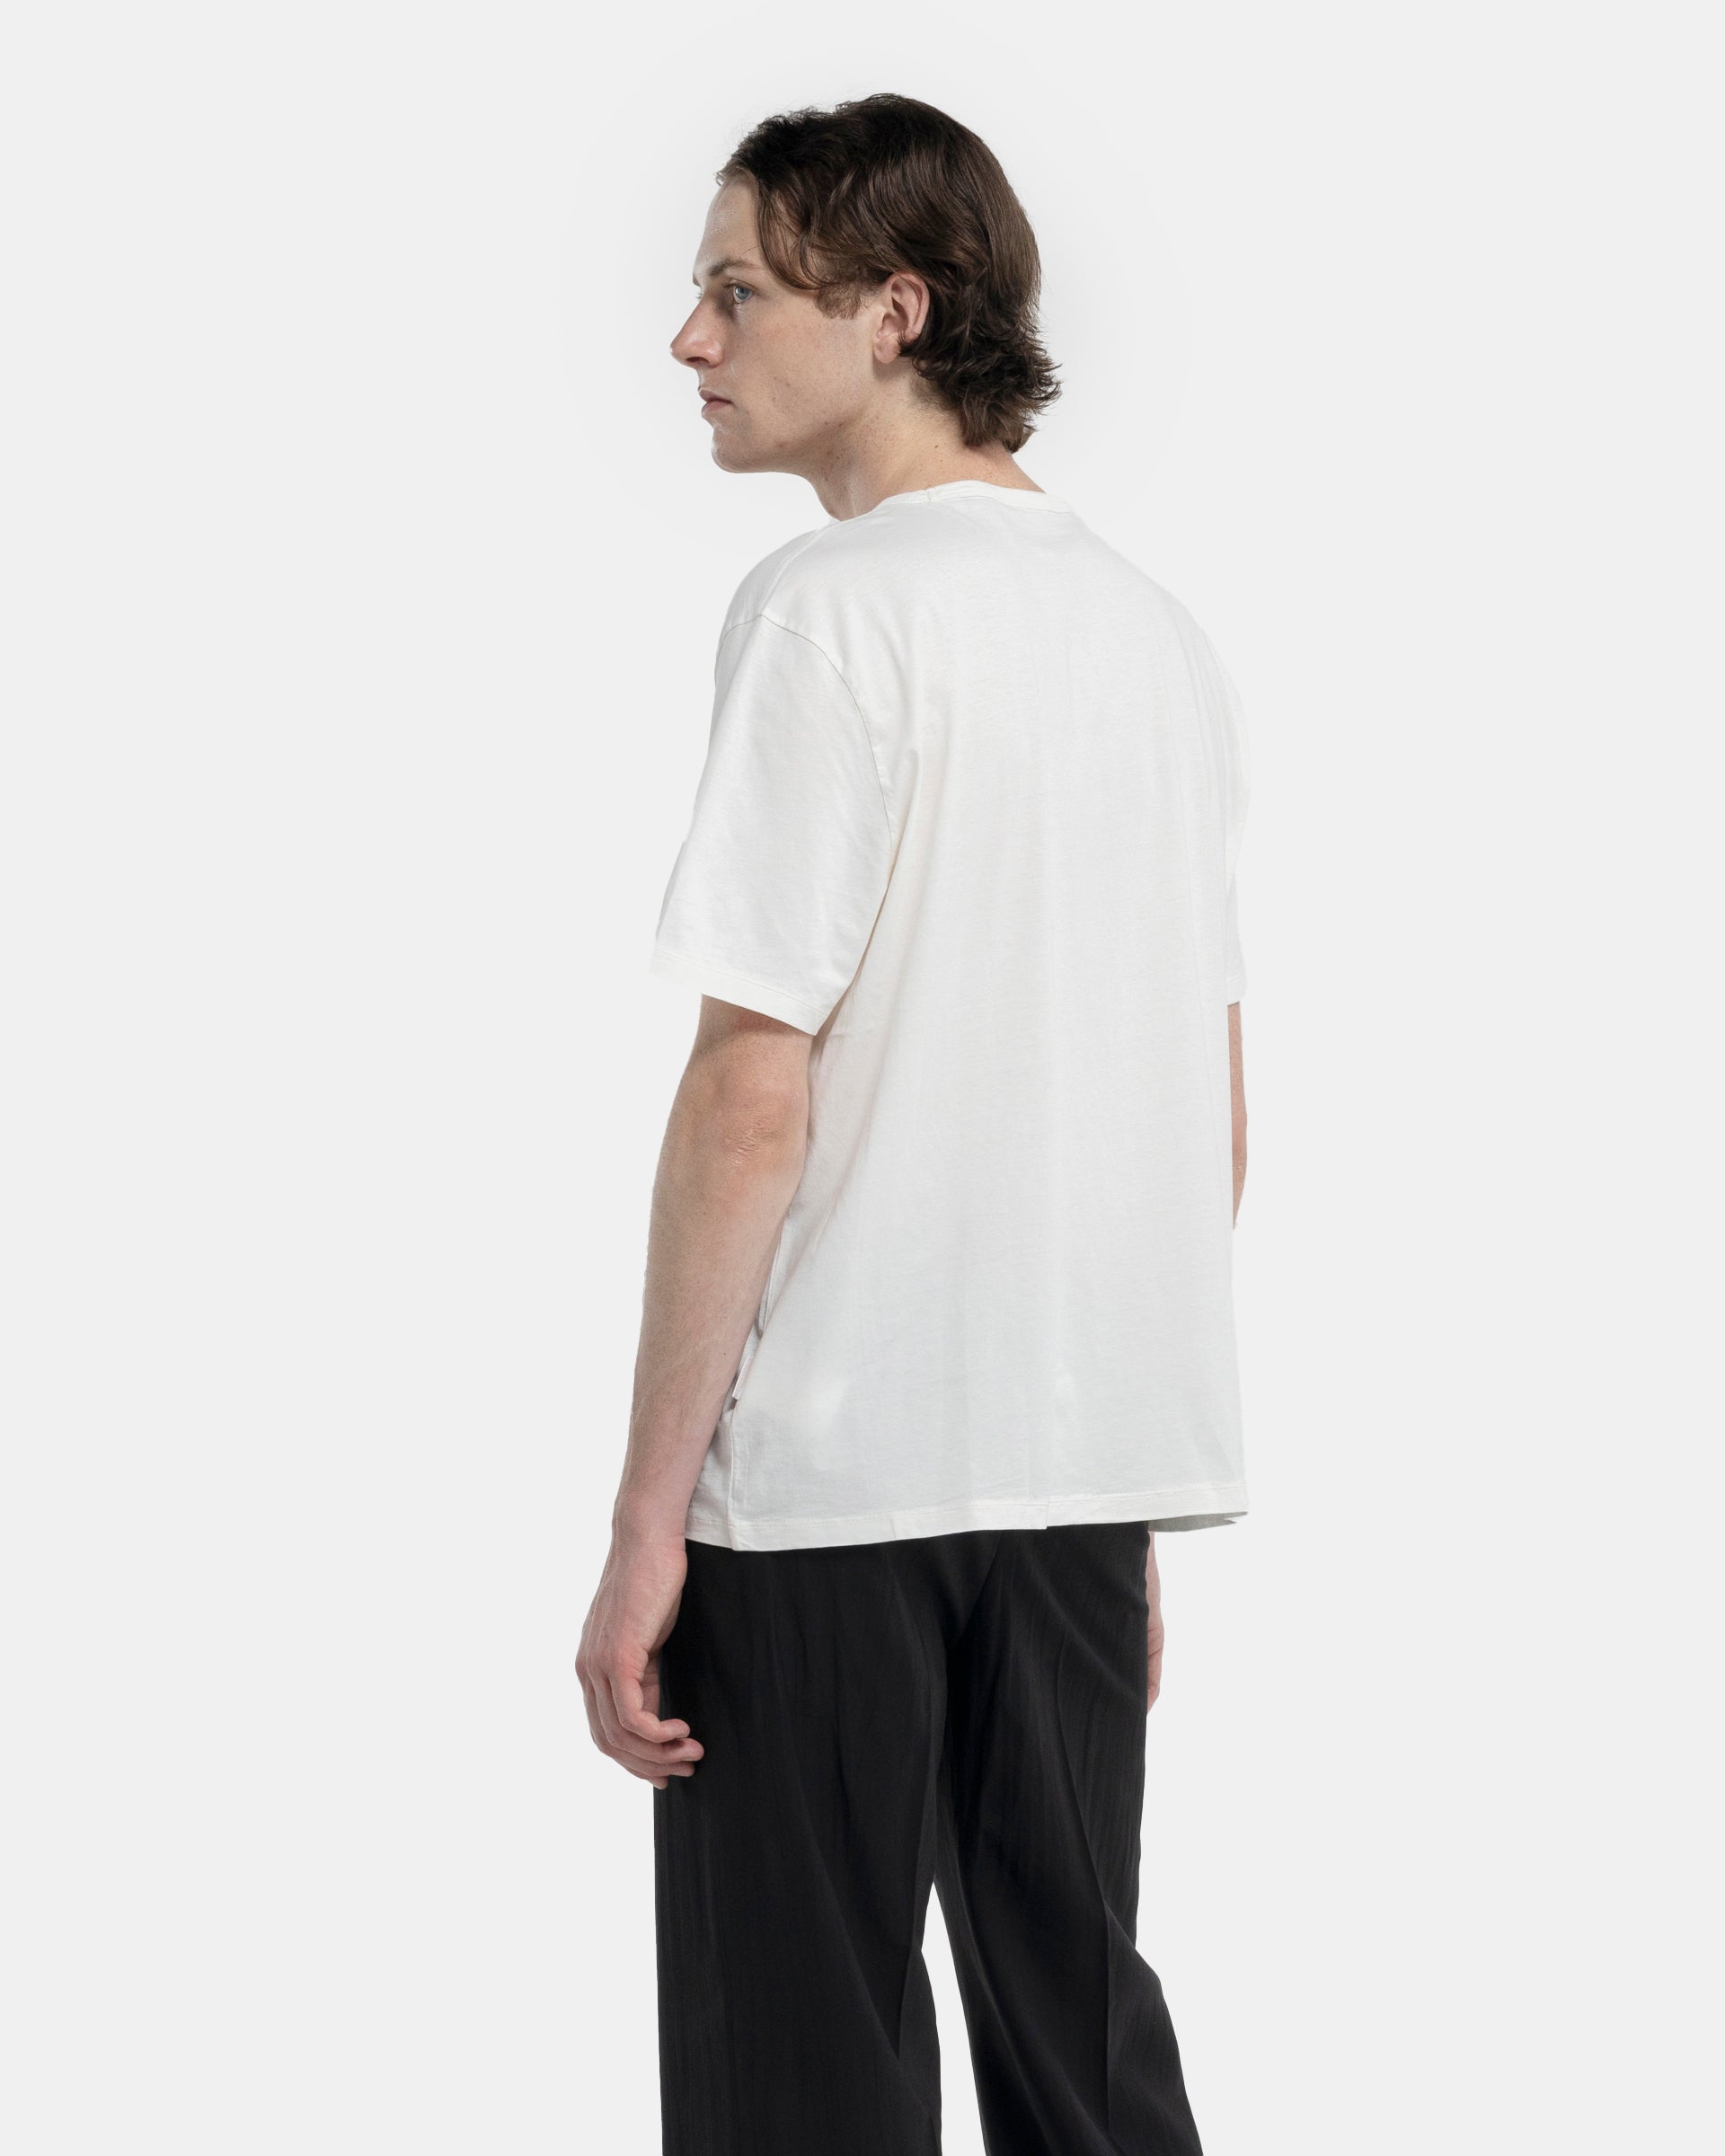 New Box T-Shirt in White